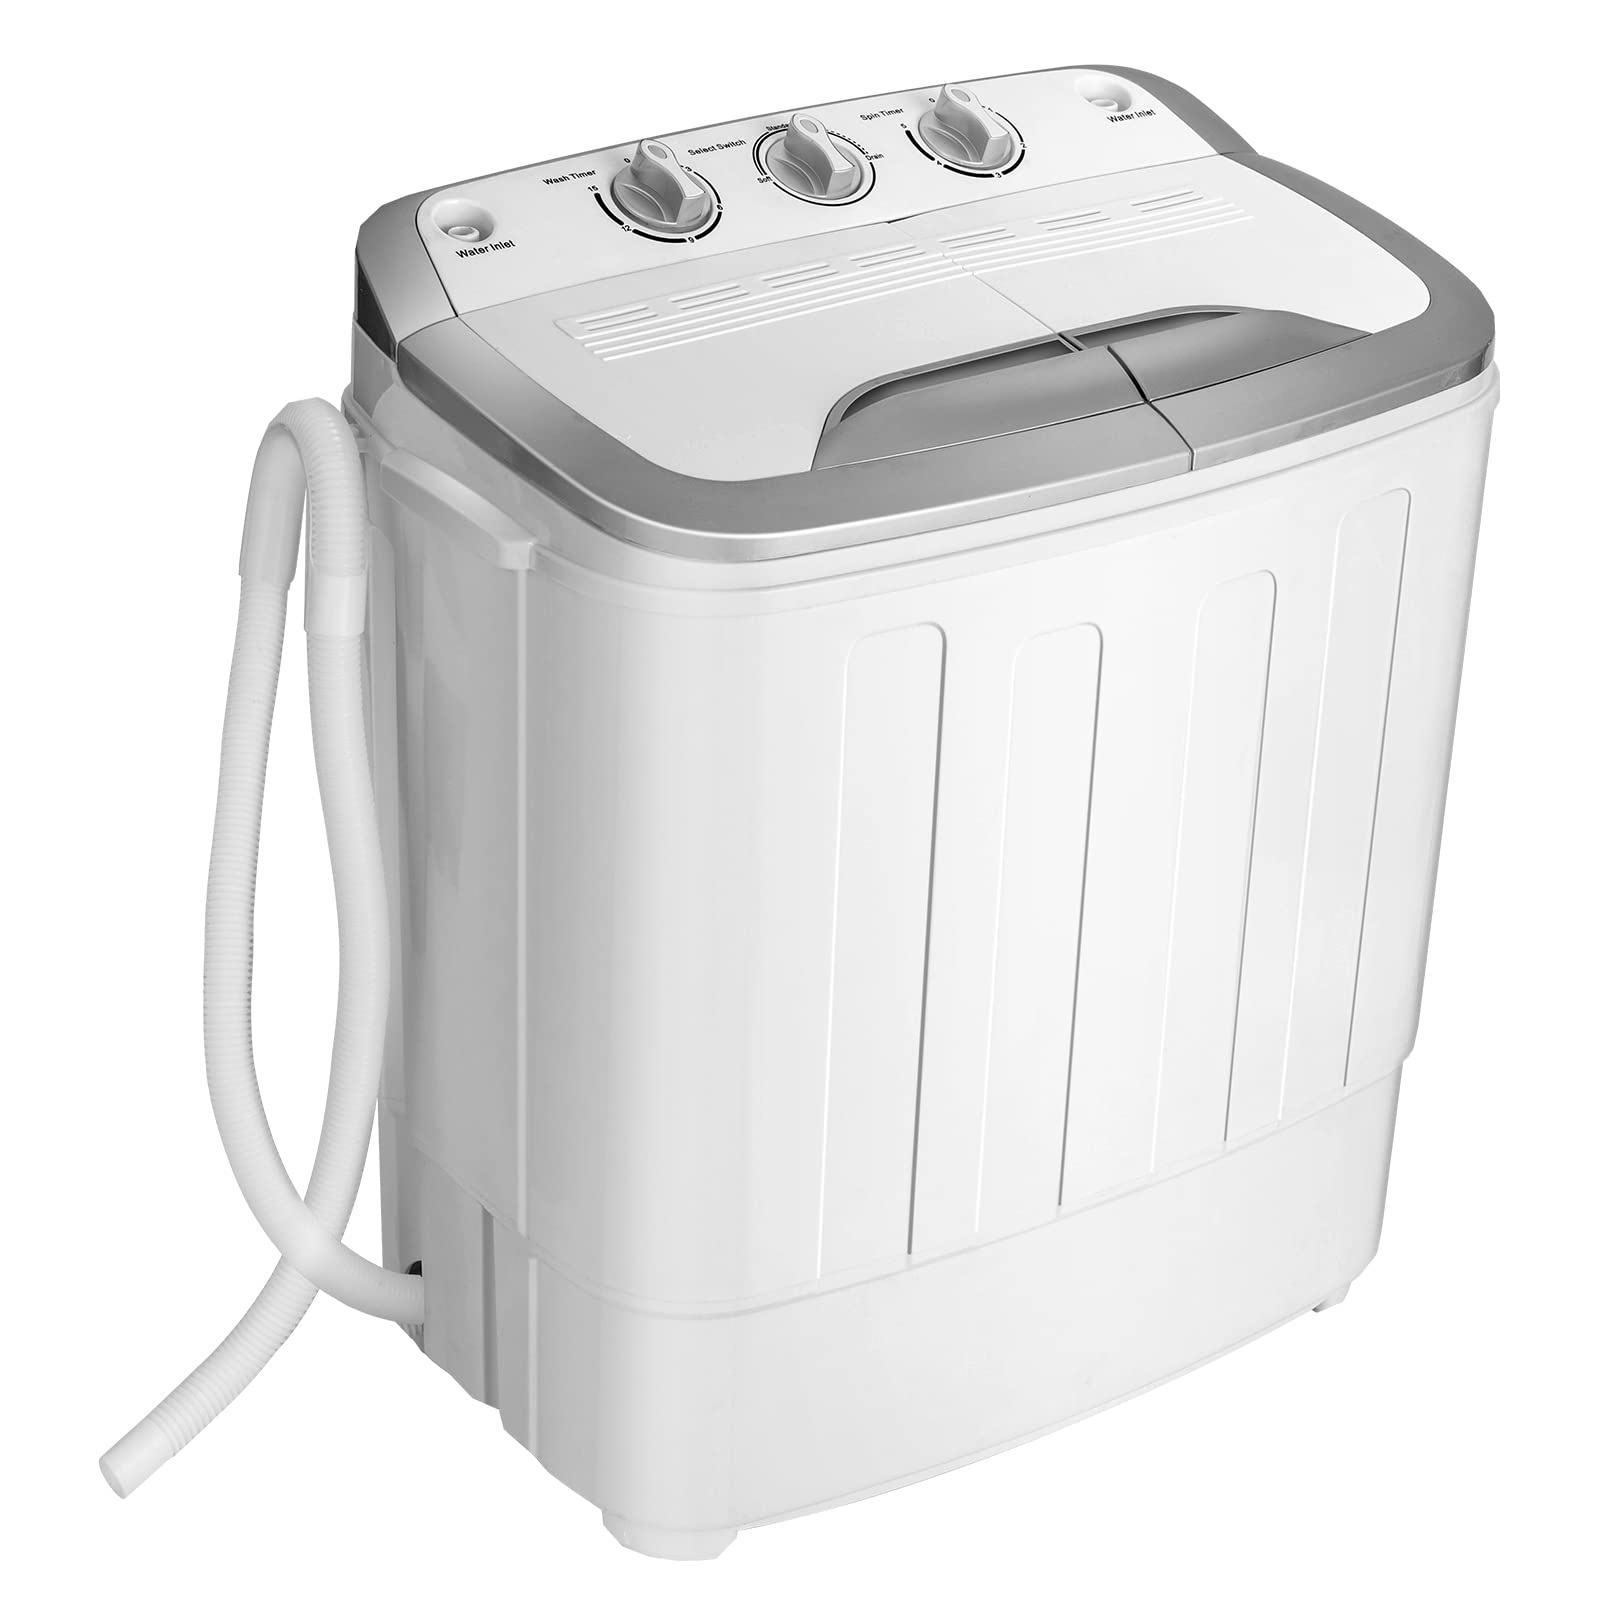 Giantex 13LBS Portable Compact Mini Twin Tub Washing Machine